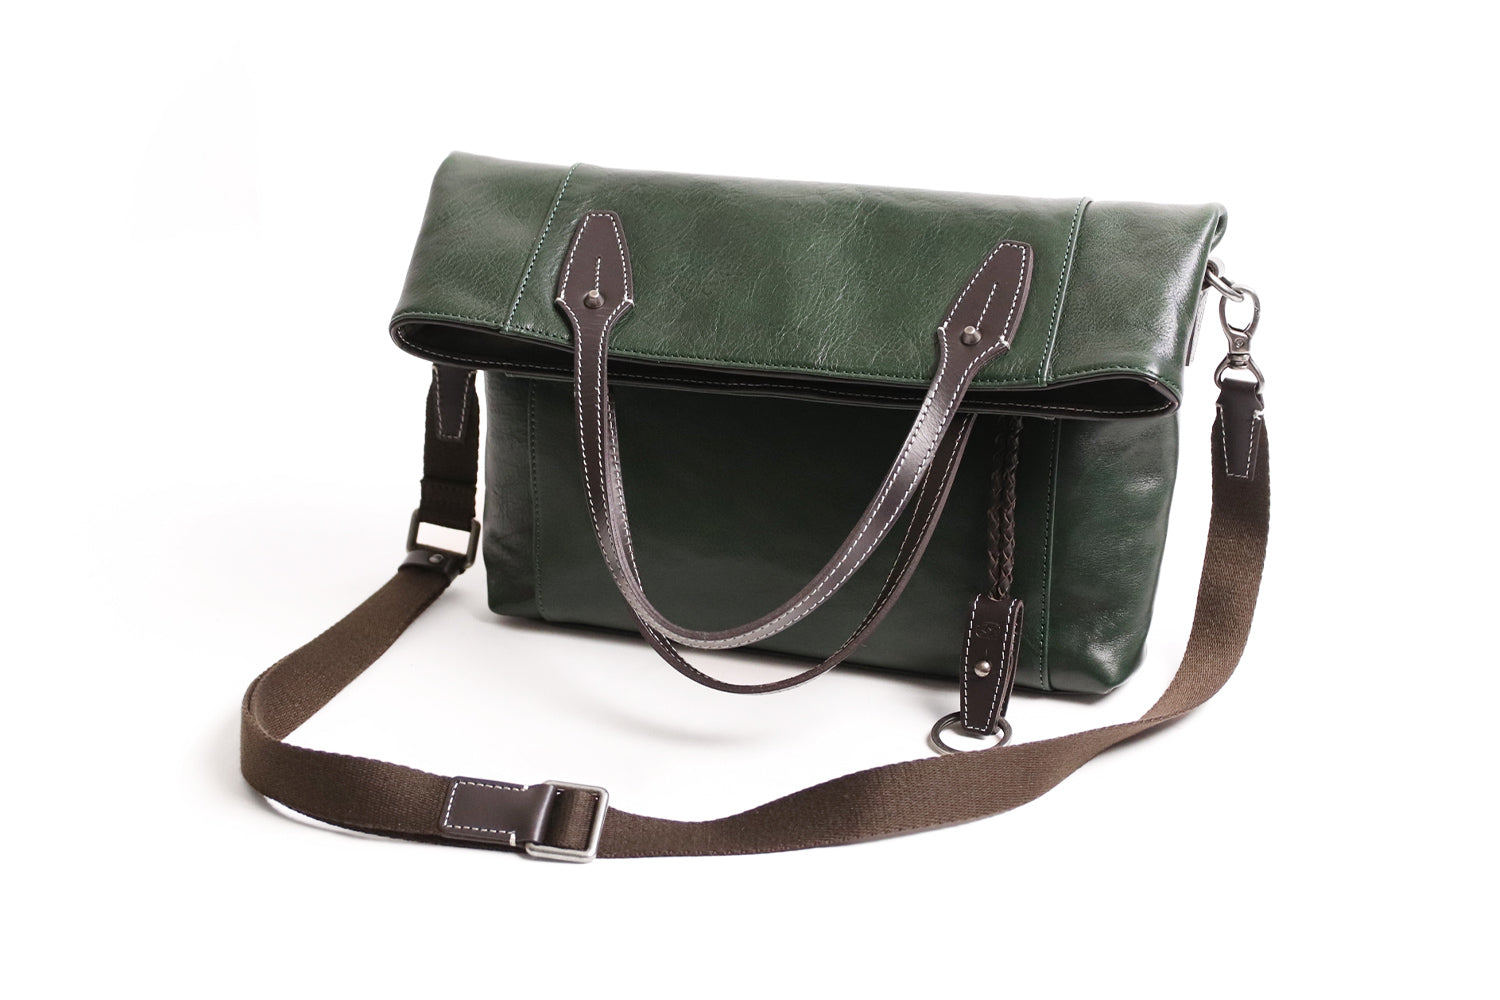 Kiefer neu / LIBERO 2-way bag made of expressive high-quality Italian leather